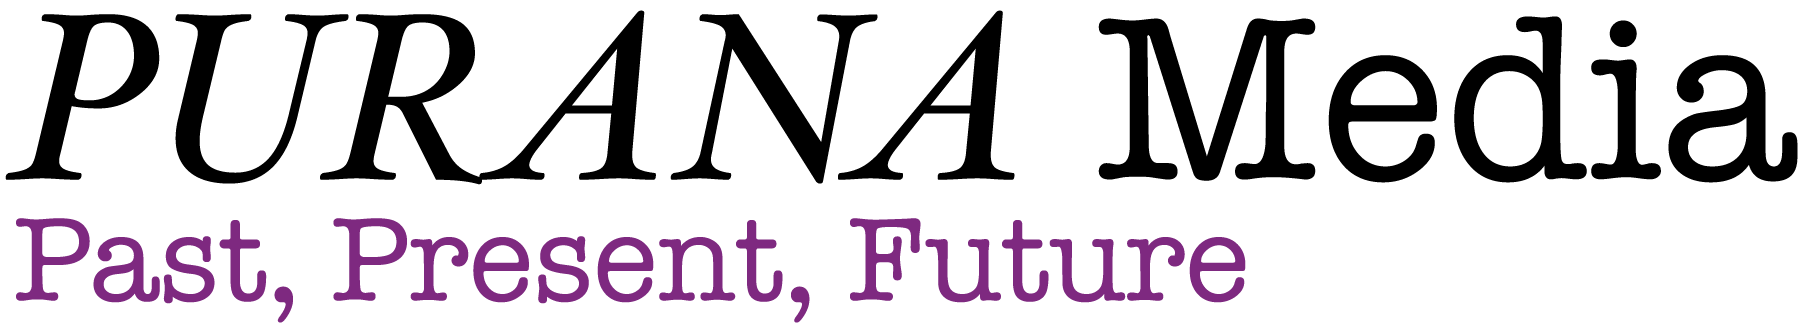 PURANA Media journal logotype in black typewriter font with subtitle "Past, Present, Future" in purple typewriter font